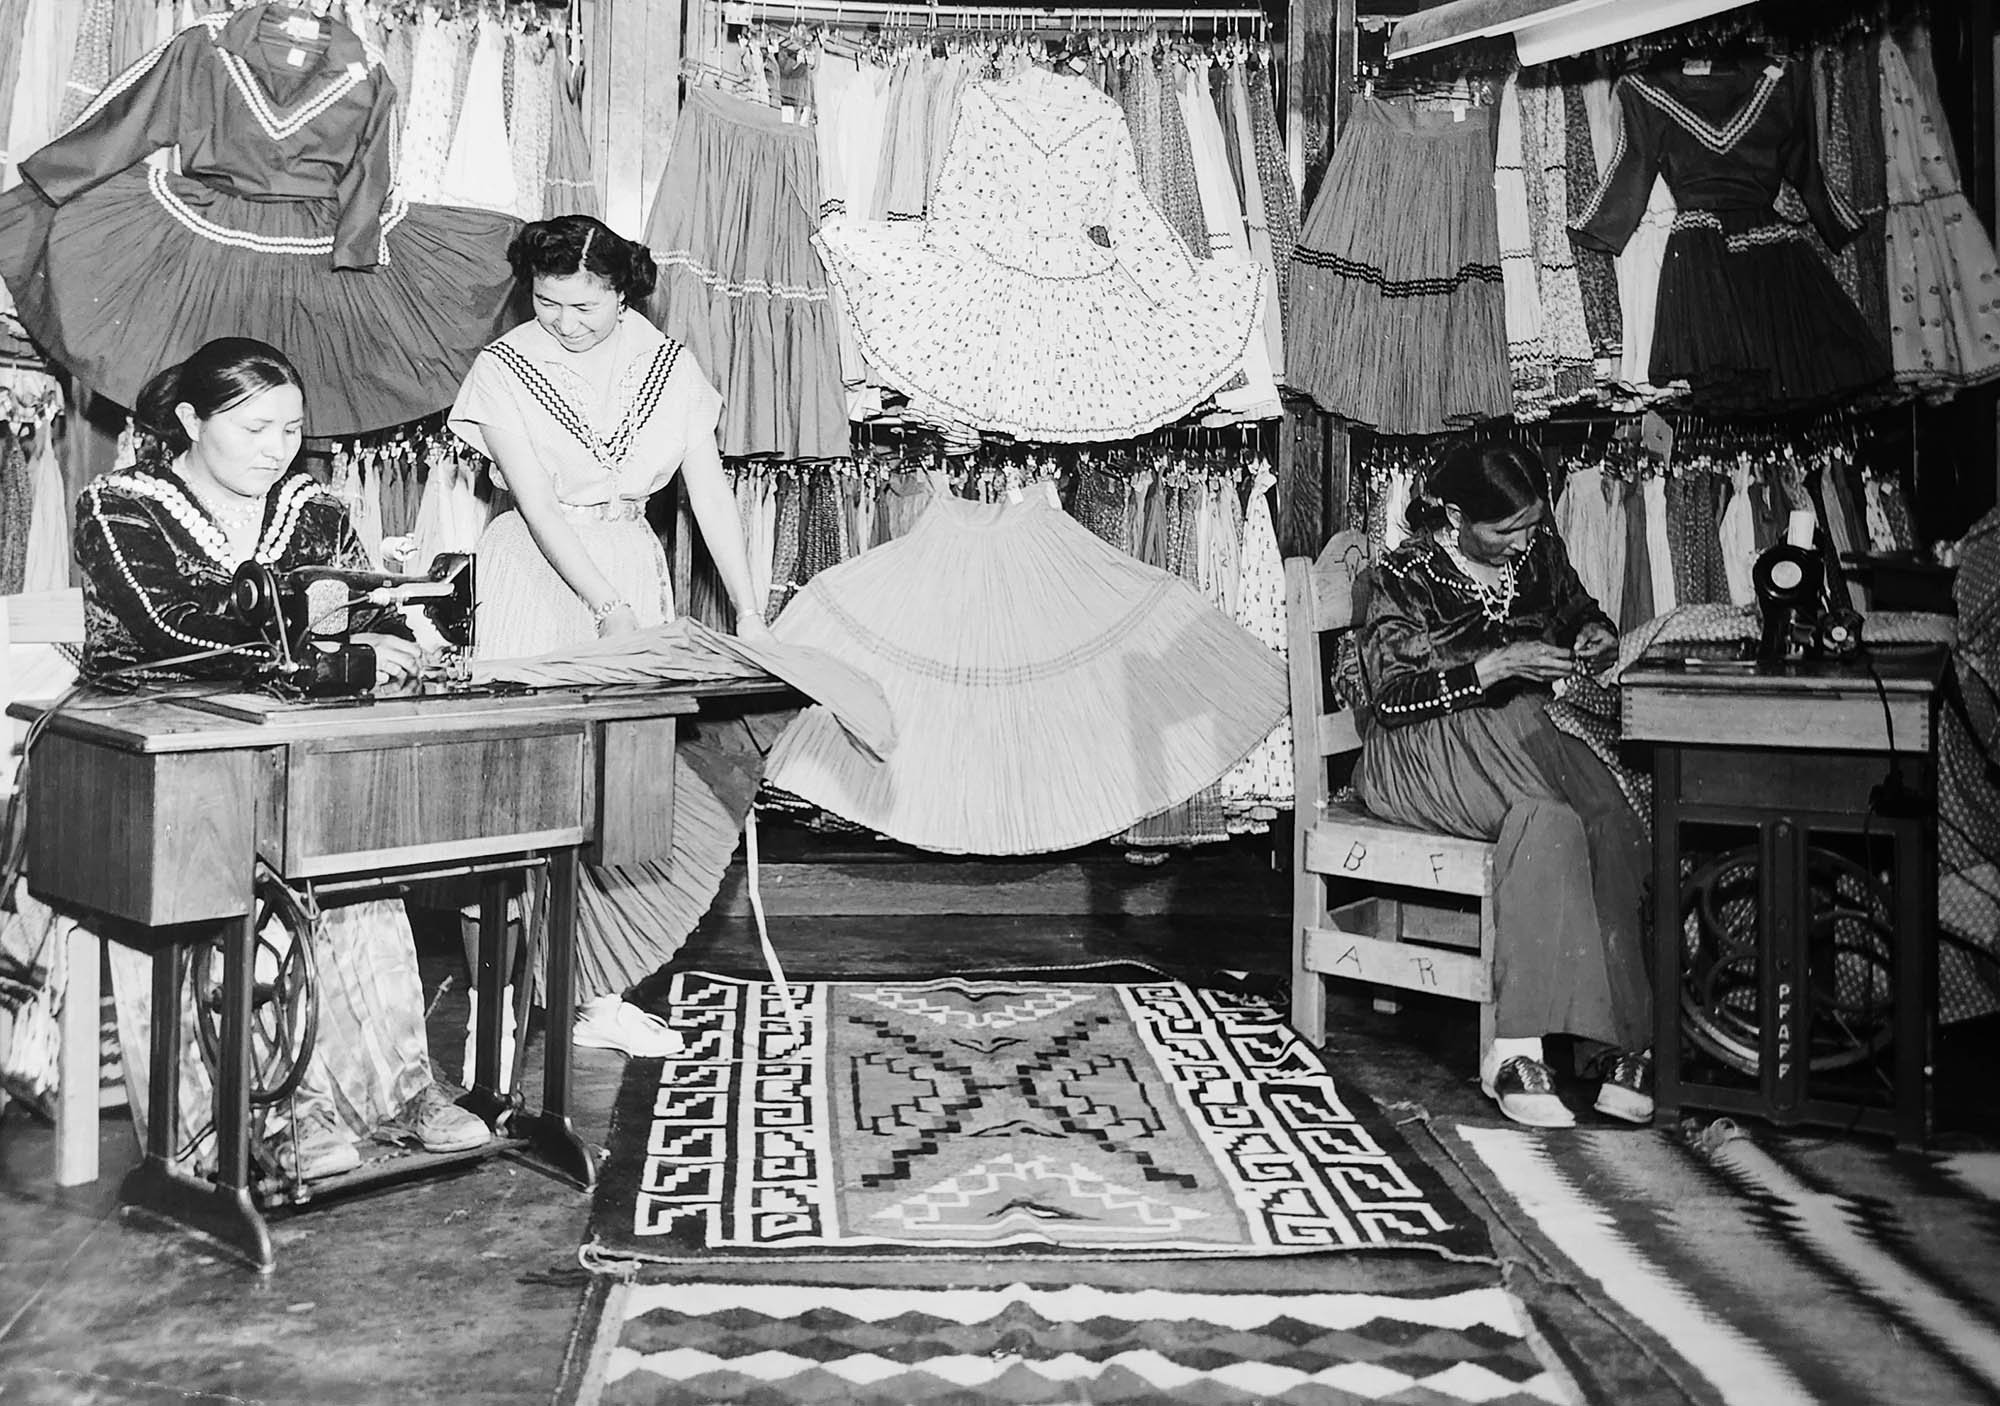 Navajo seamstresses at work sewing fiesta dresses